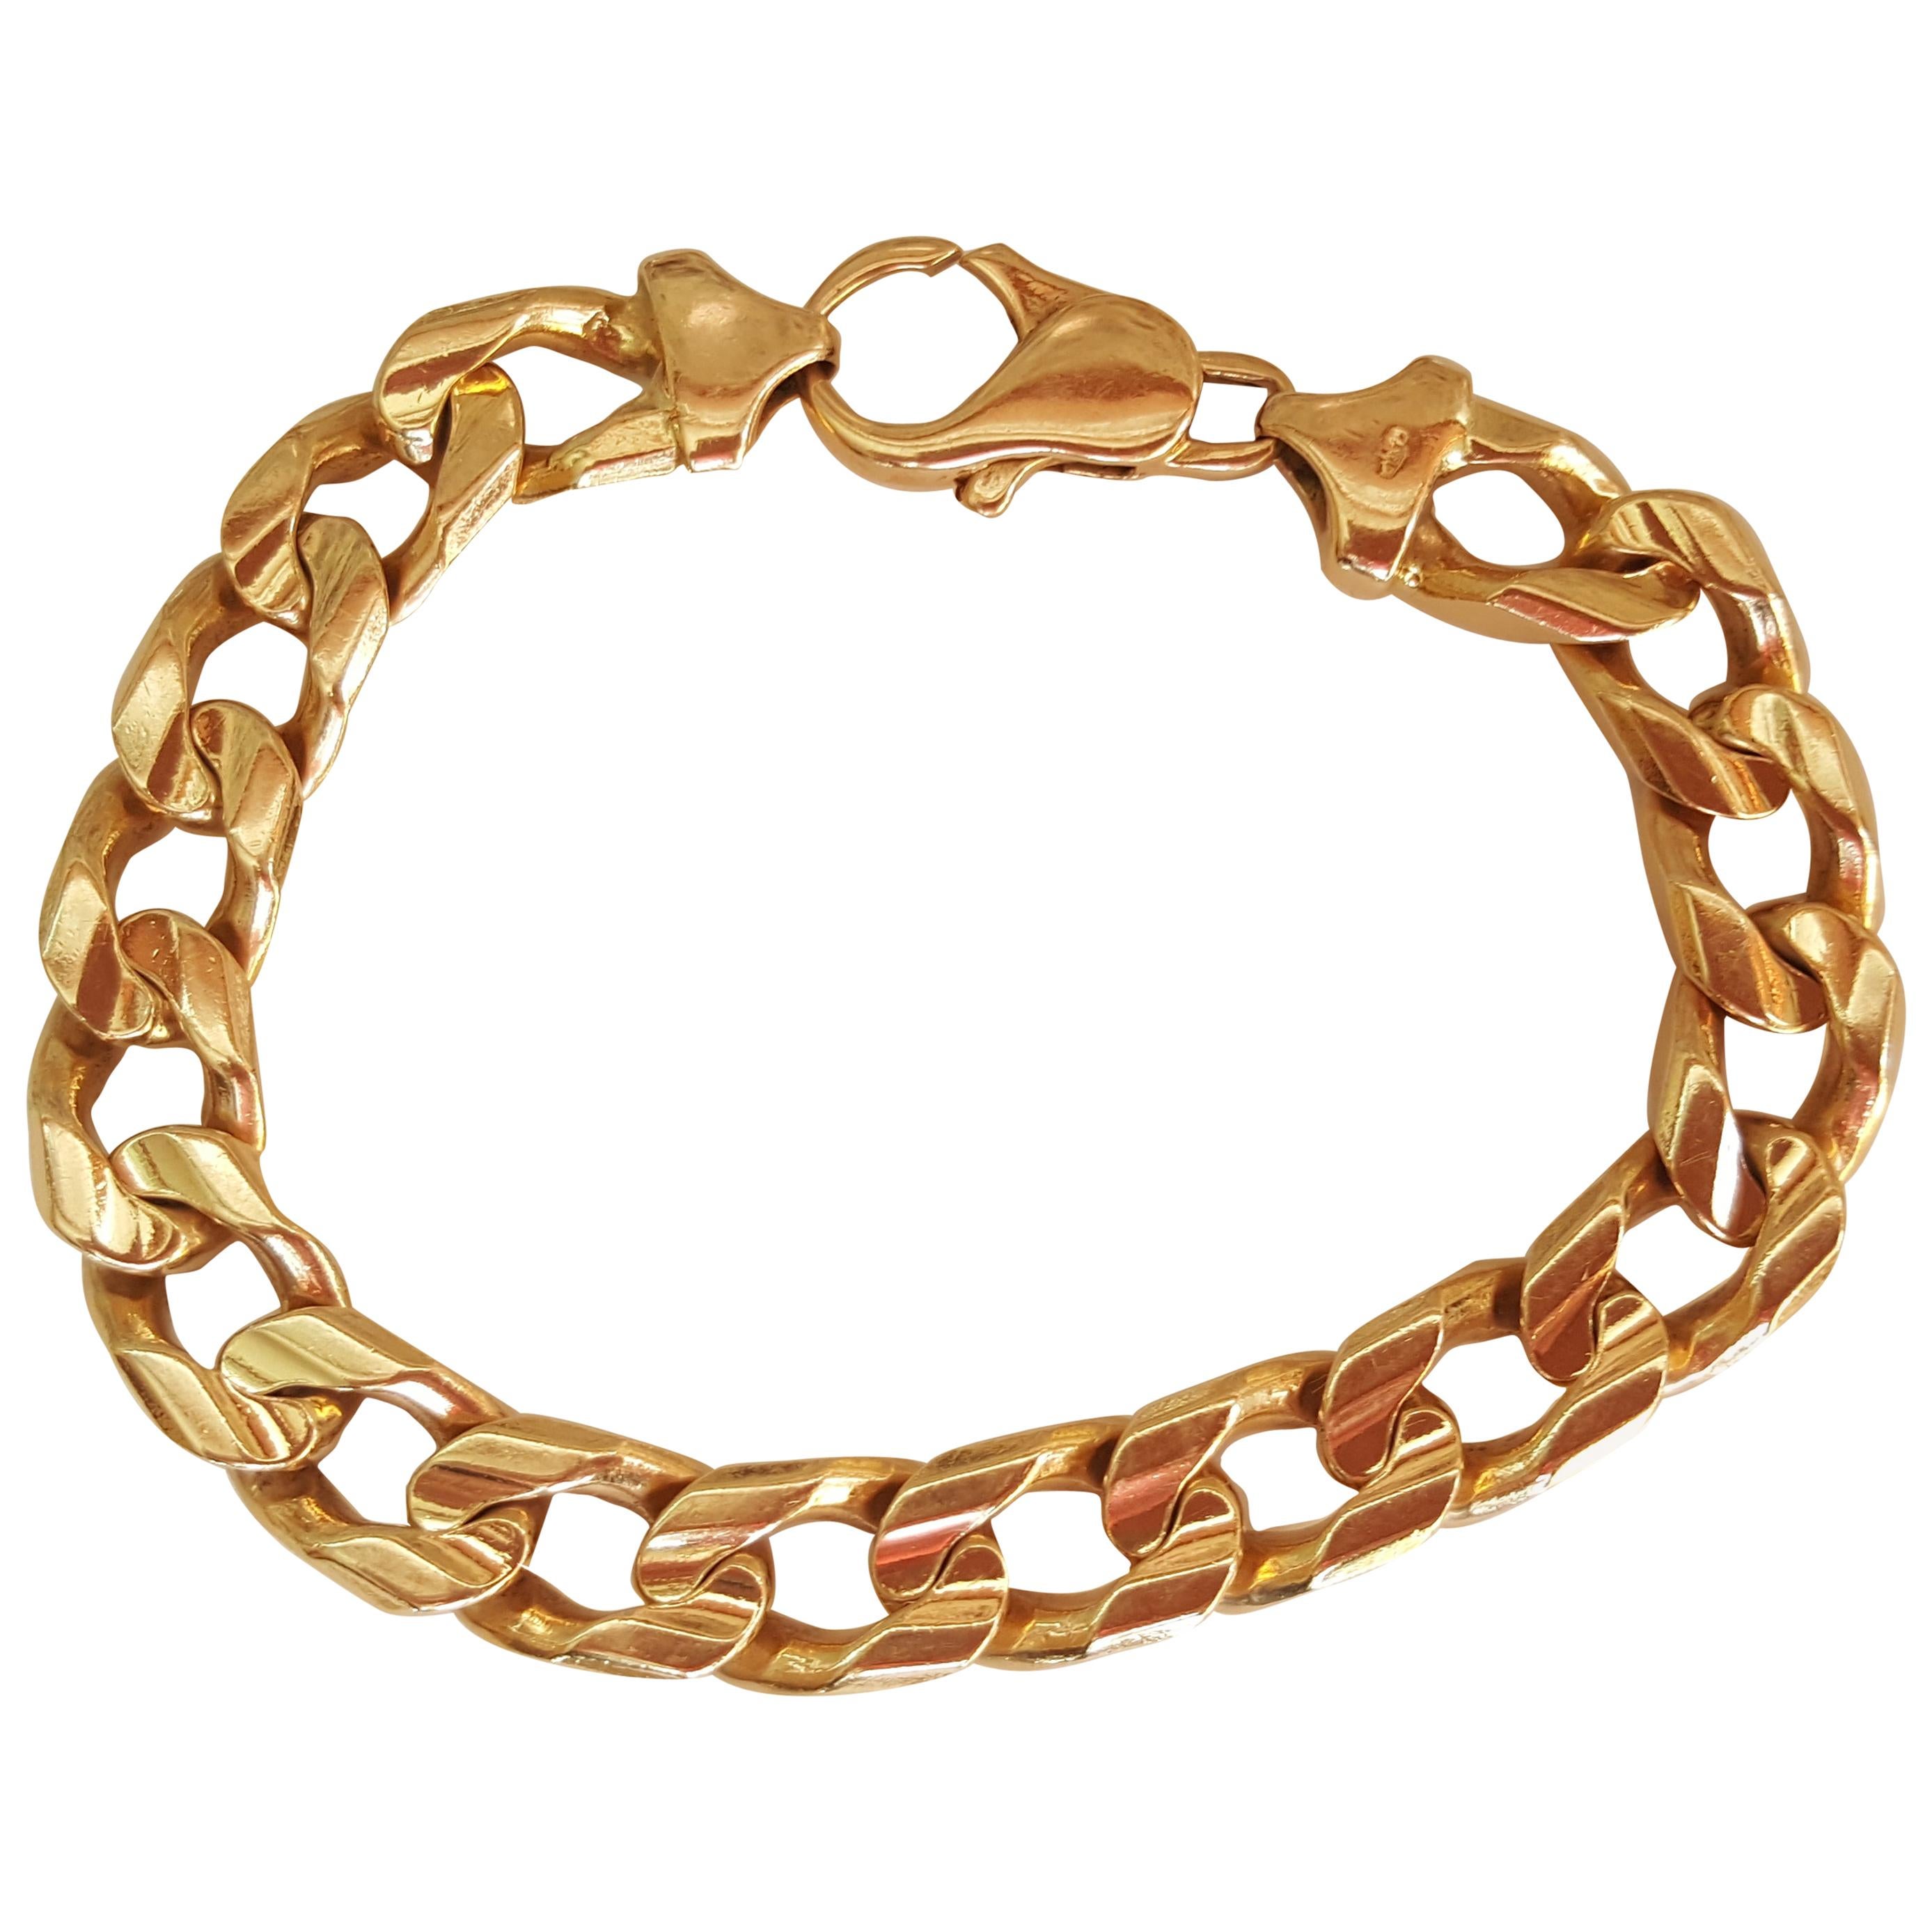 Solid 14 Karat Yellow Gold Figaro Link Bracelet, Italian, 72.4 Grams